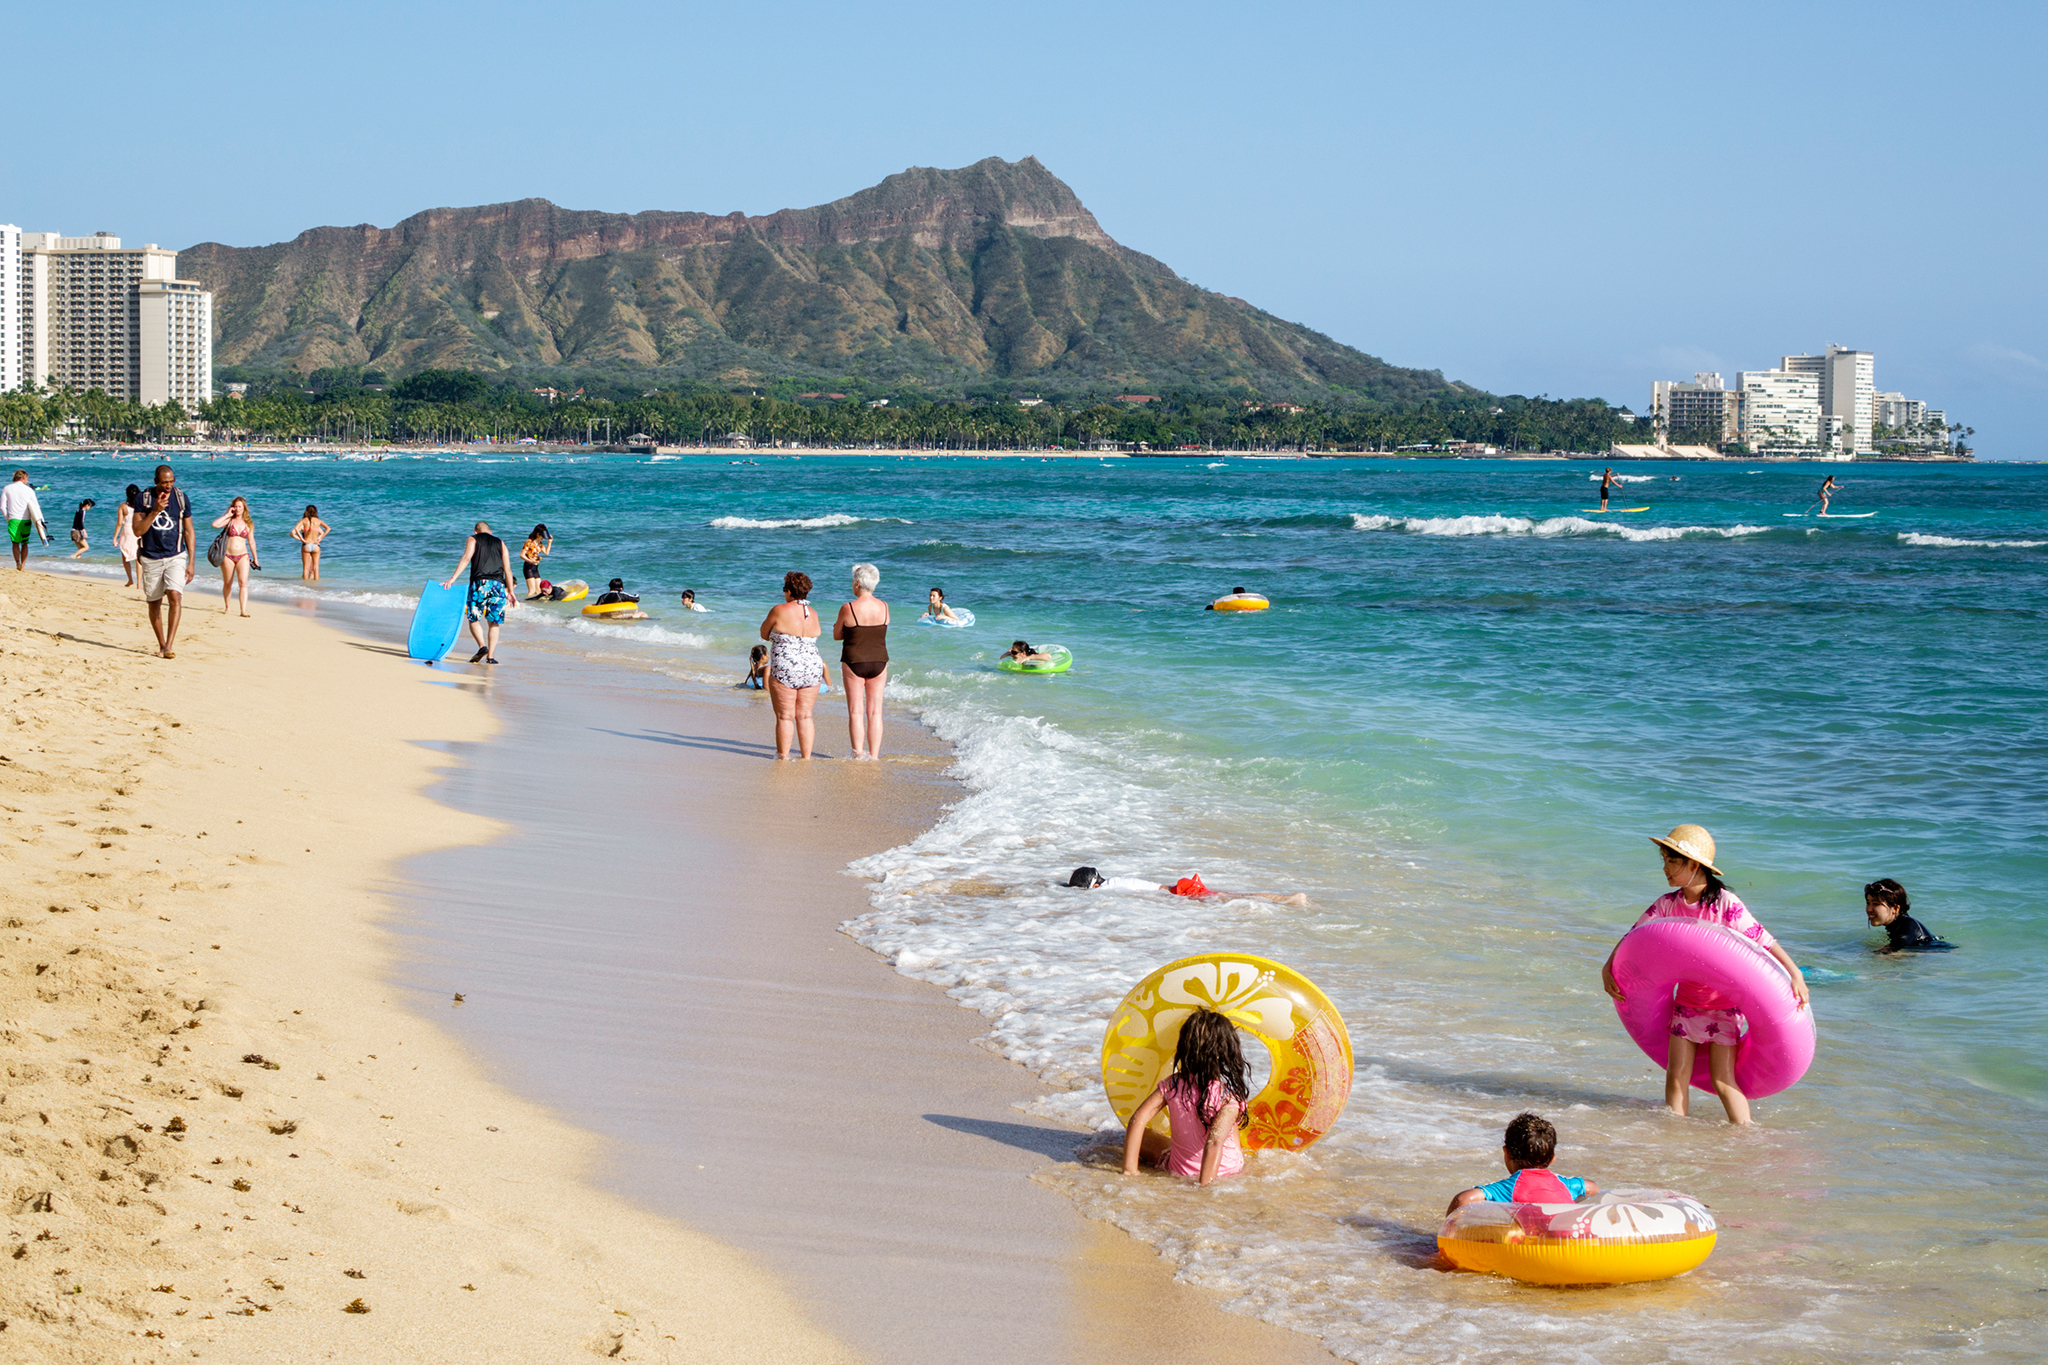 The overwhelming plastic waste Hawaii visitors leave behind